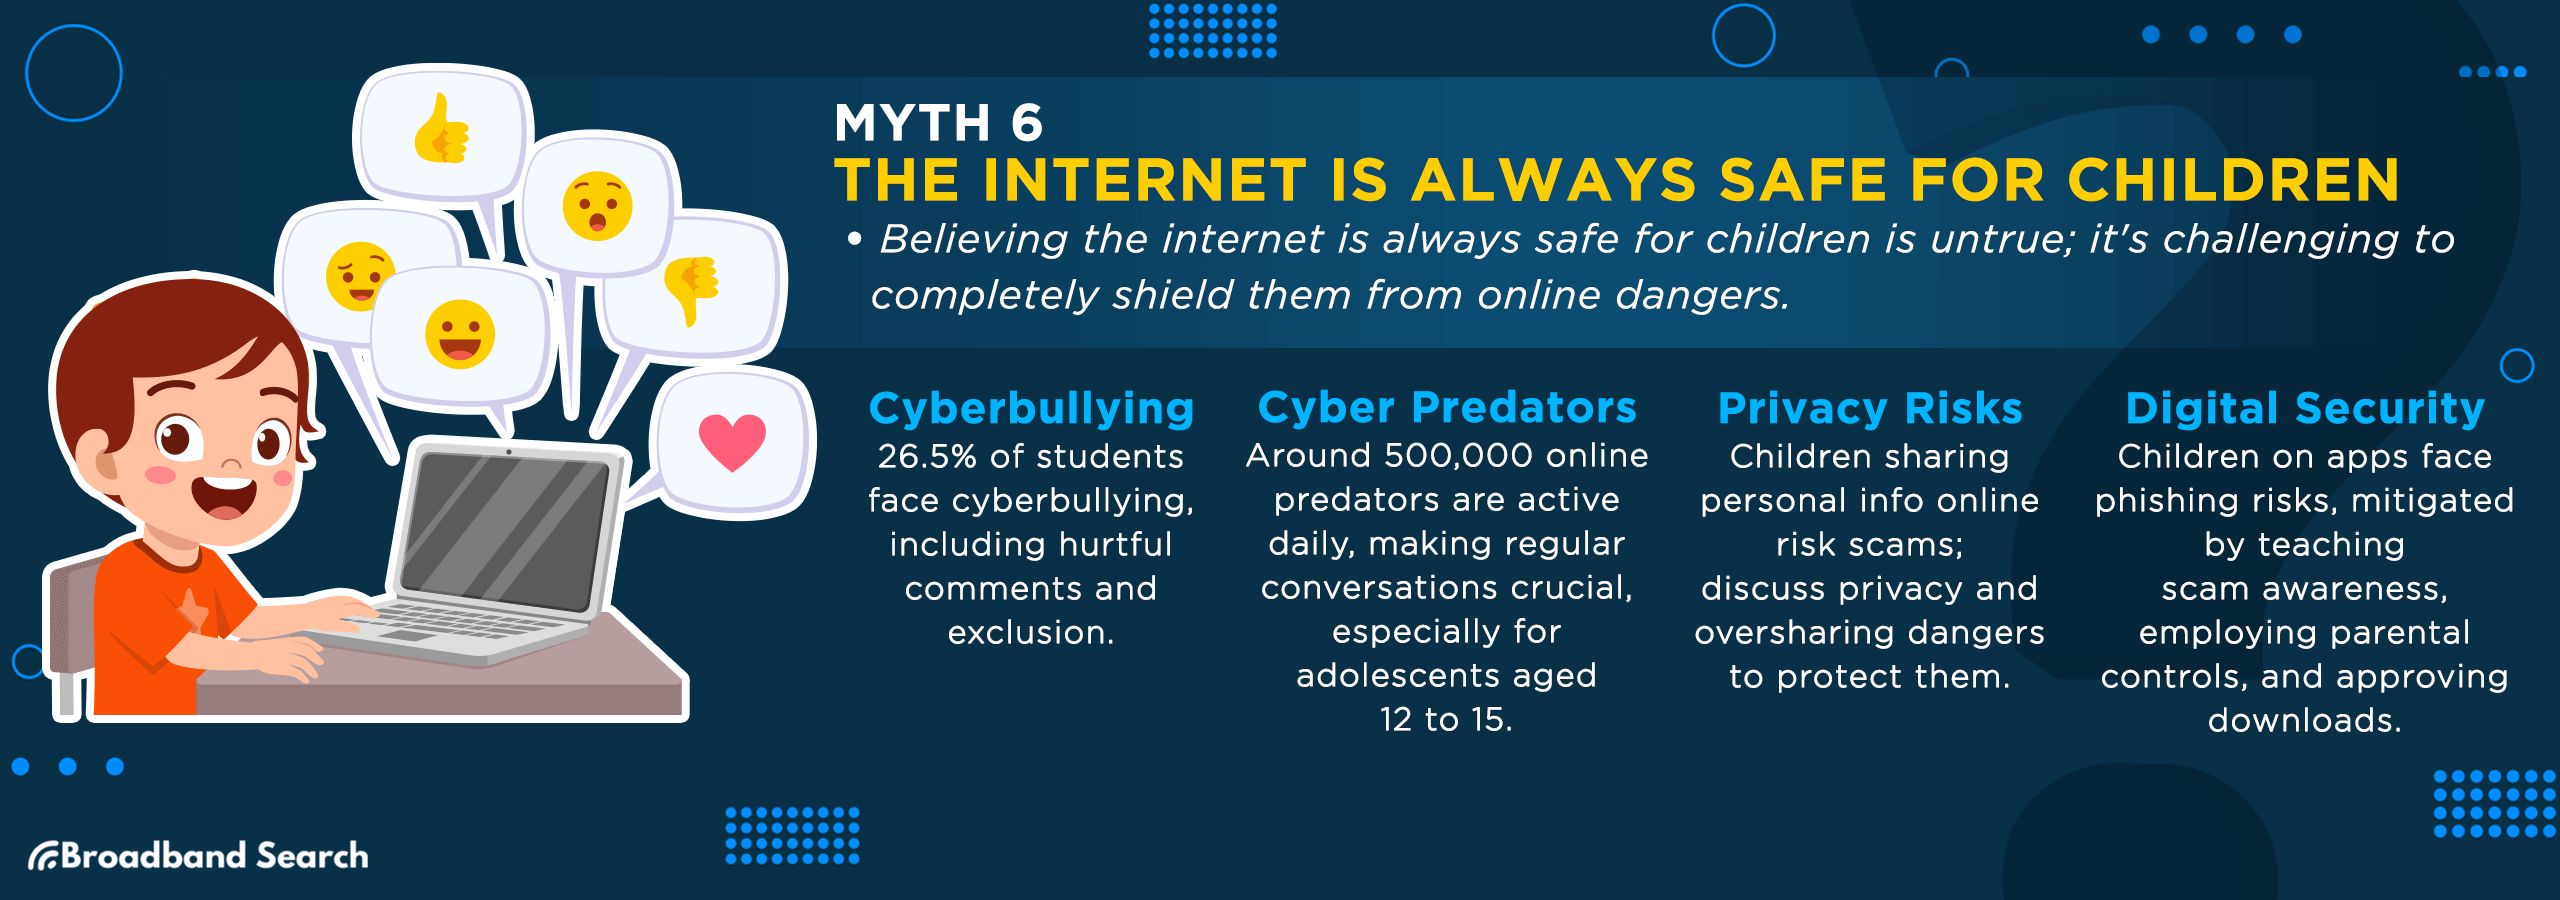 sixth internet myth, the internet is always safe for children